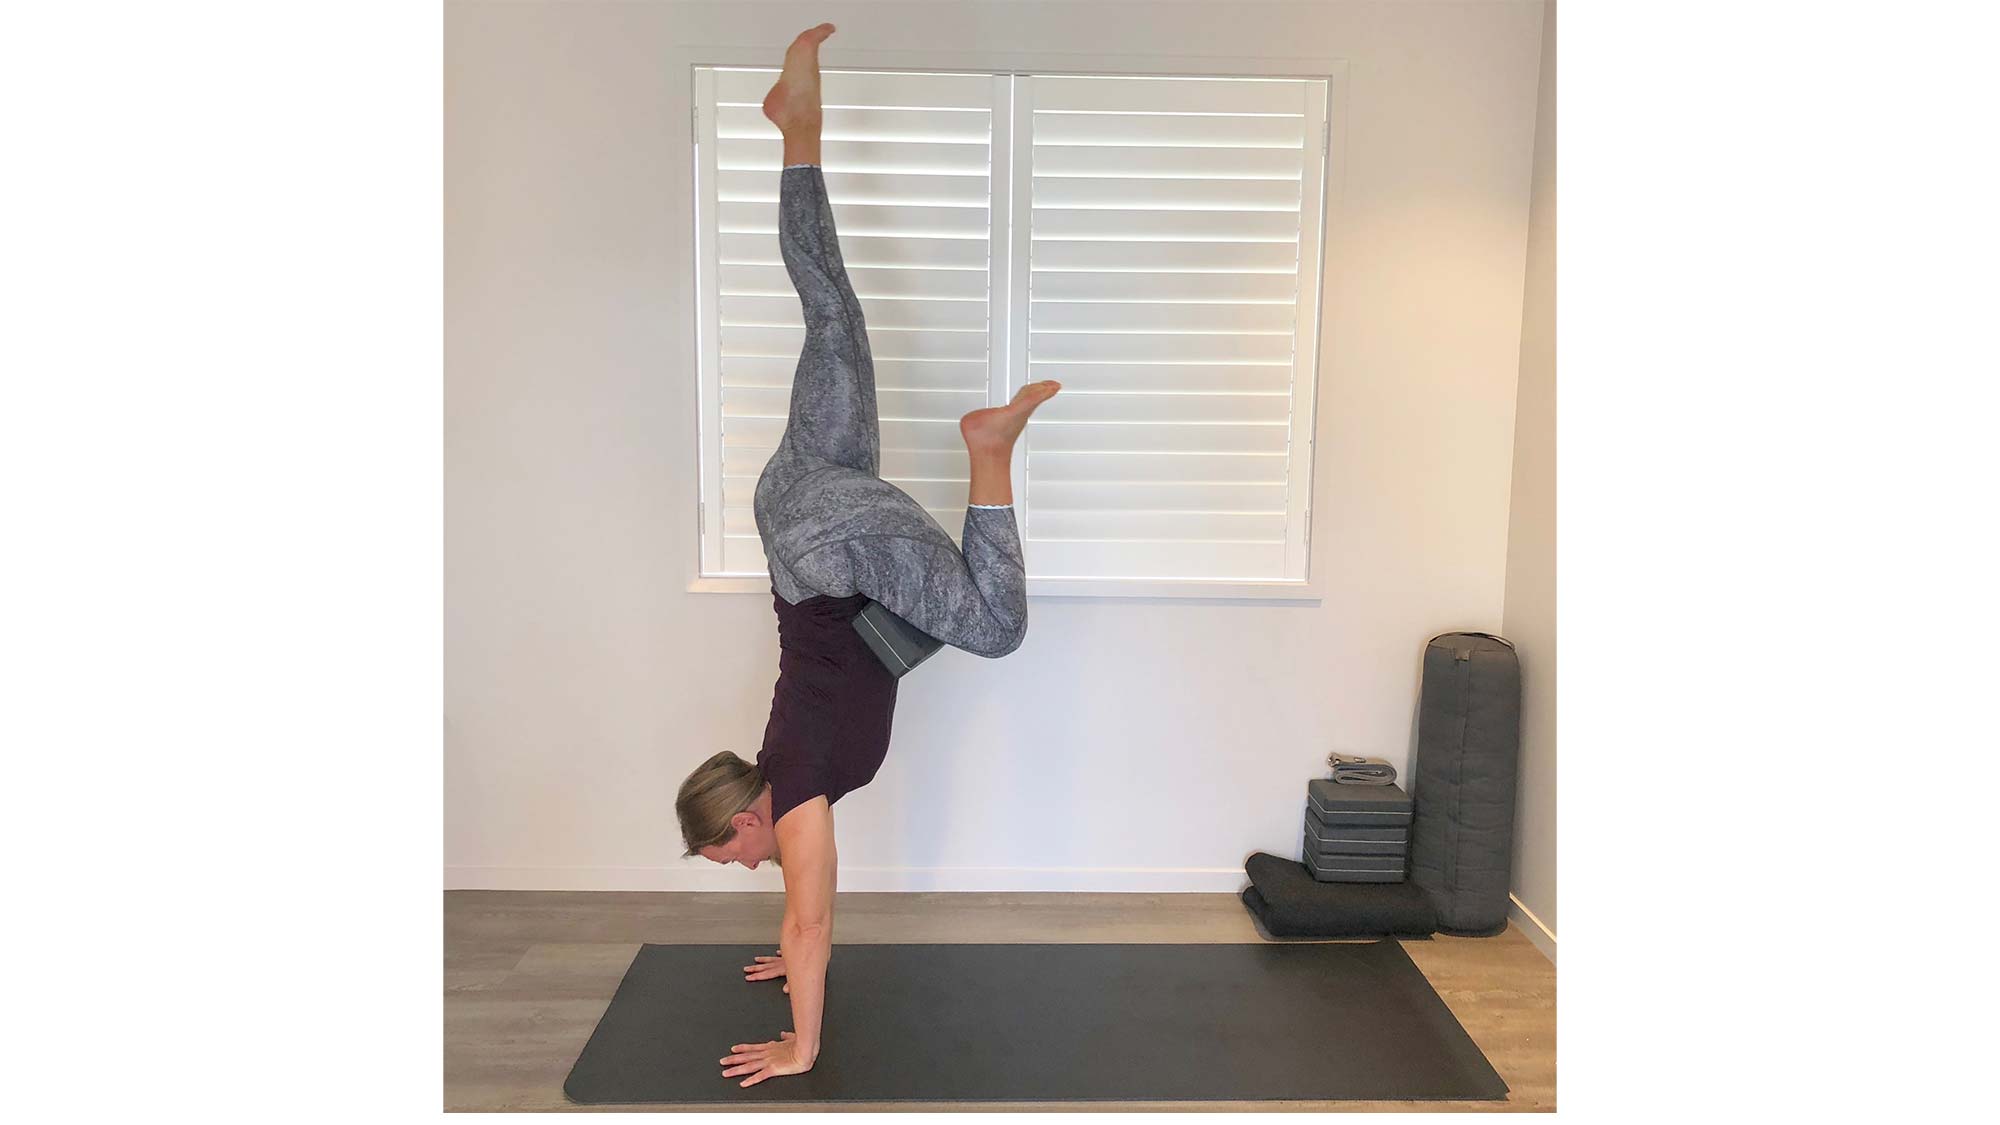 KEEP Yoga Block, High Density EVA Foam Blocks for Yoga, Pilates, Meditation  , Aid Balance, Support and Deepen Poses - Non-Slip Lightweight Durable  2-Pack-Grey